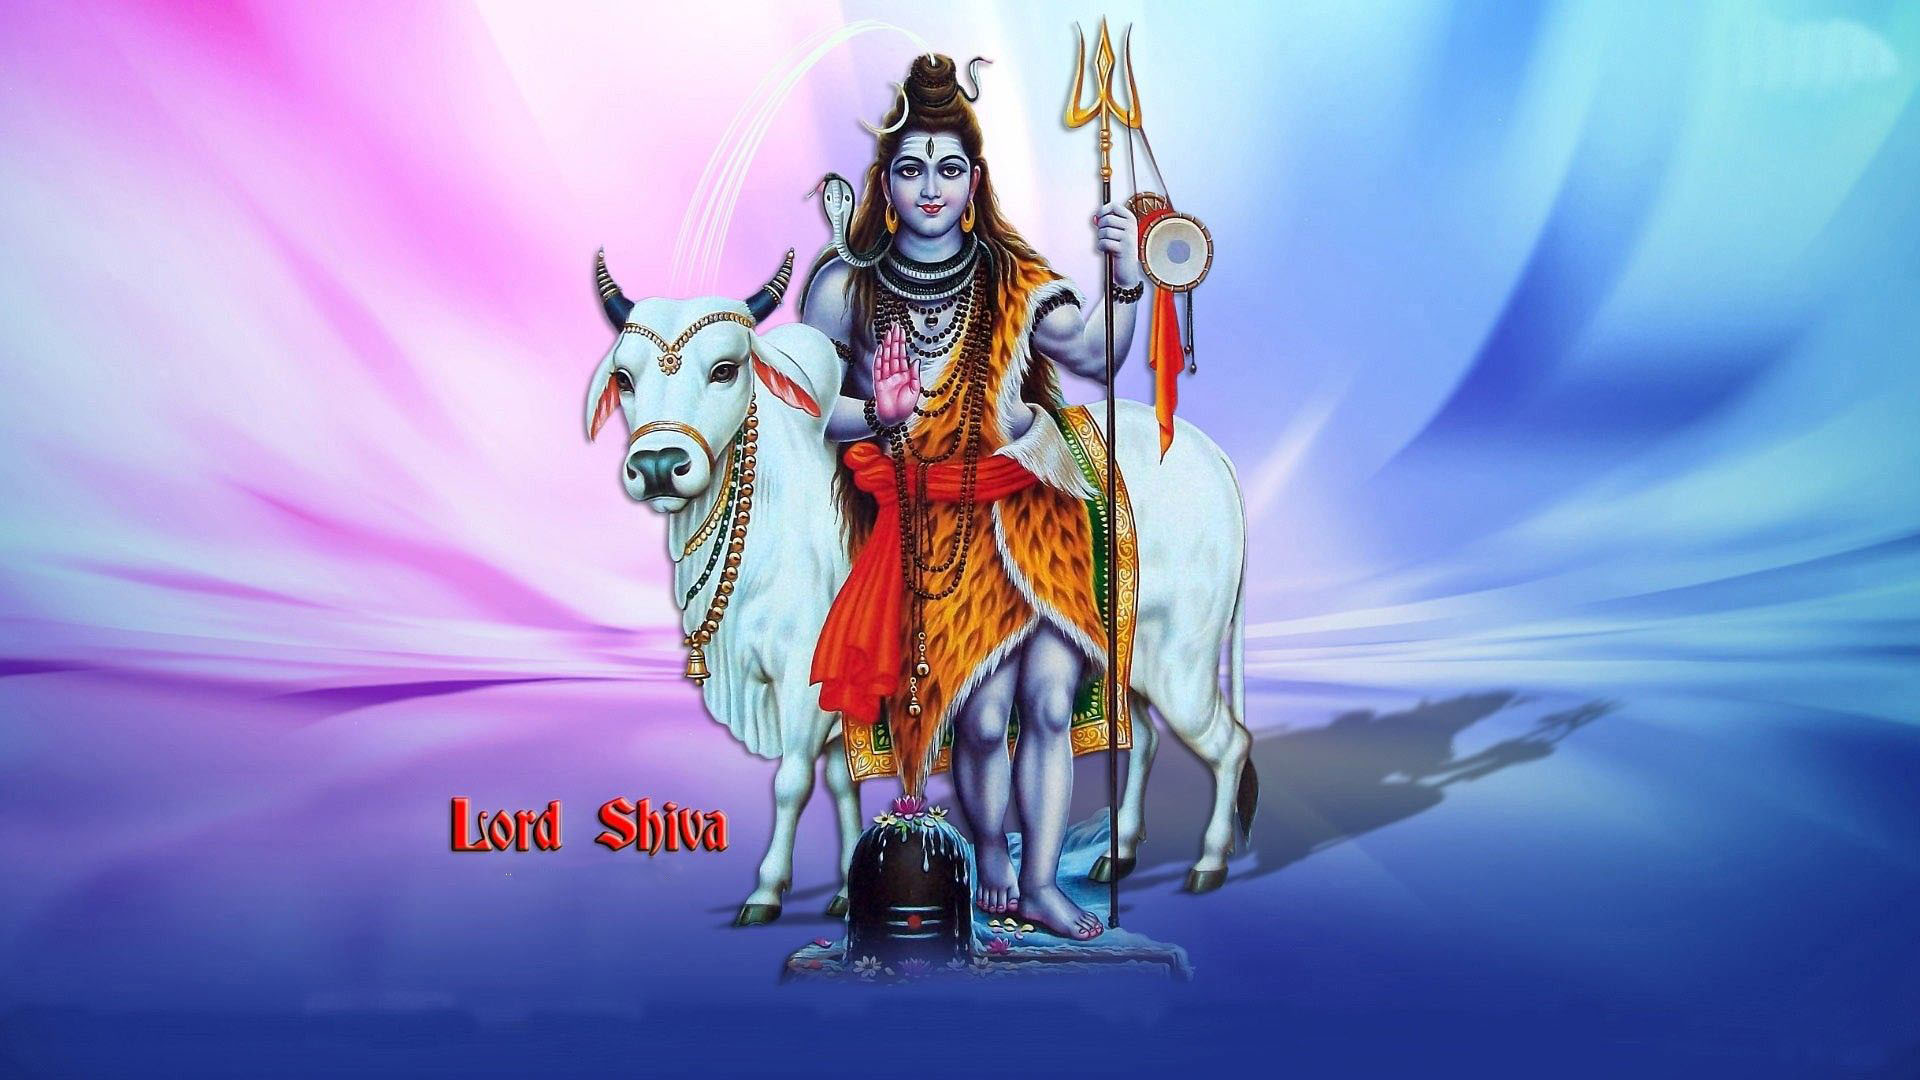 Lord Shiva Images Hd 1080p | Hindu Gods and Goddesses